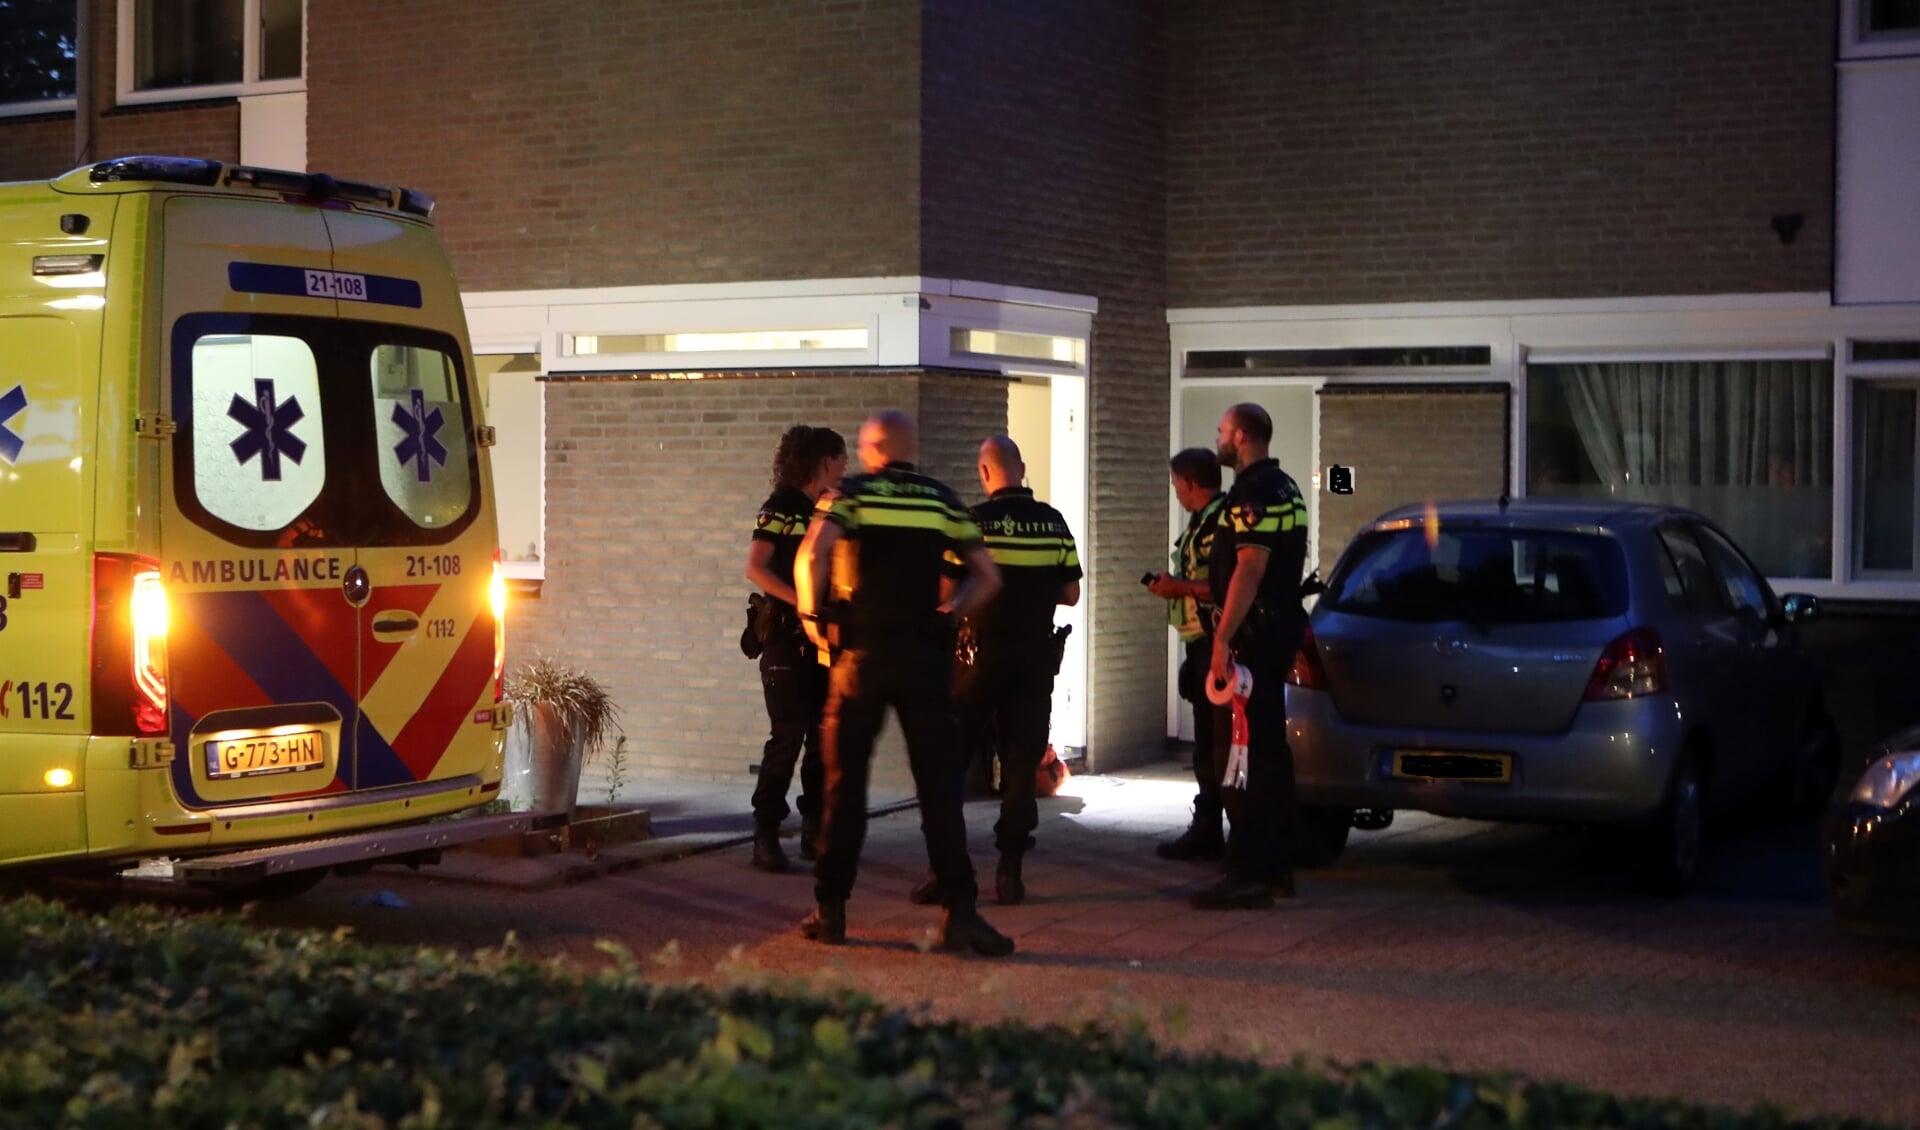 Steekpartij in Merinohof, man gewond geraakt. (Foto: Hans van der Poel)